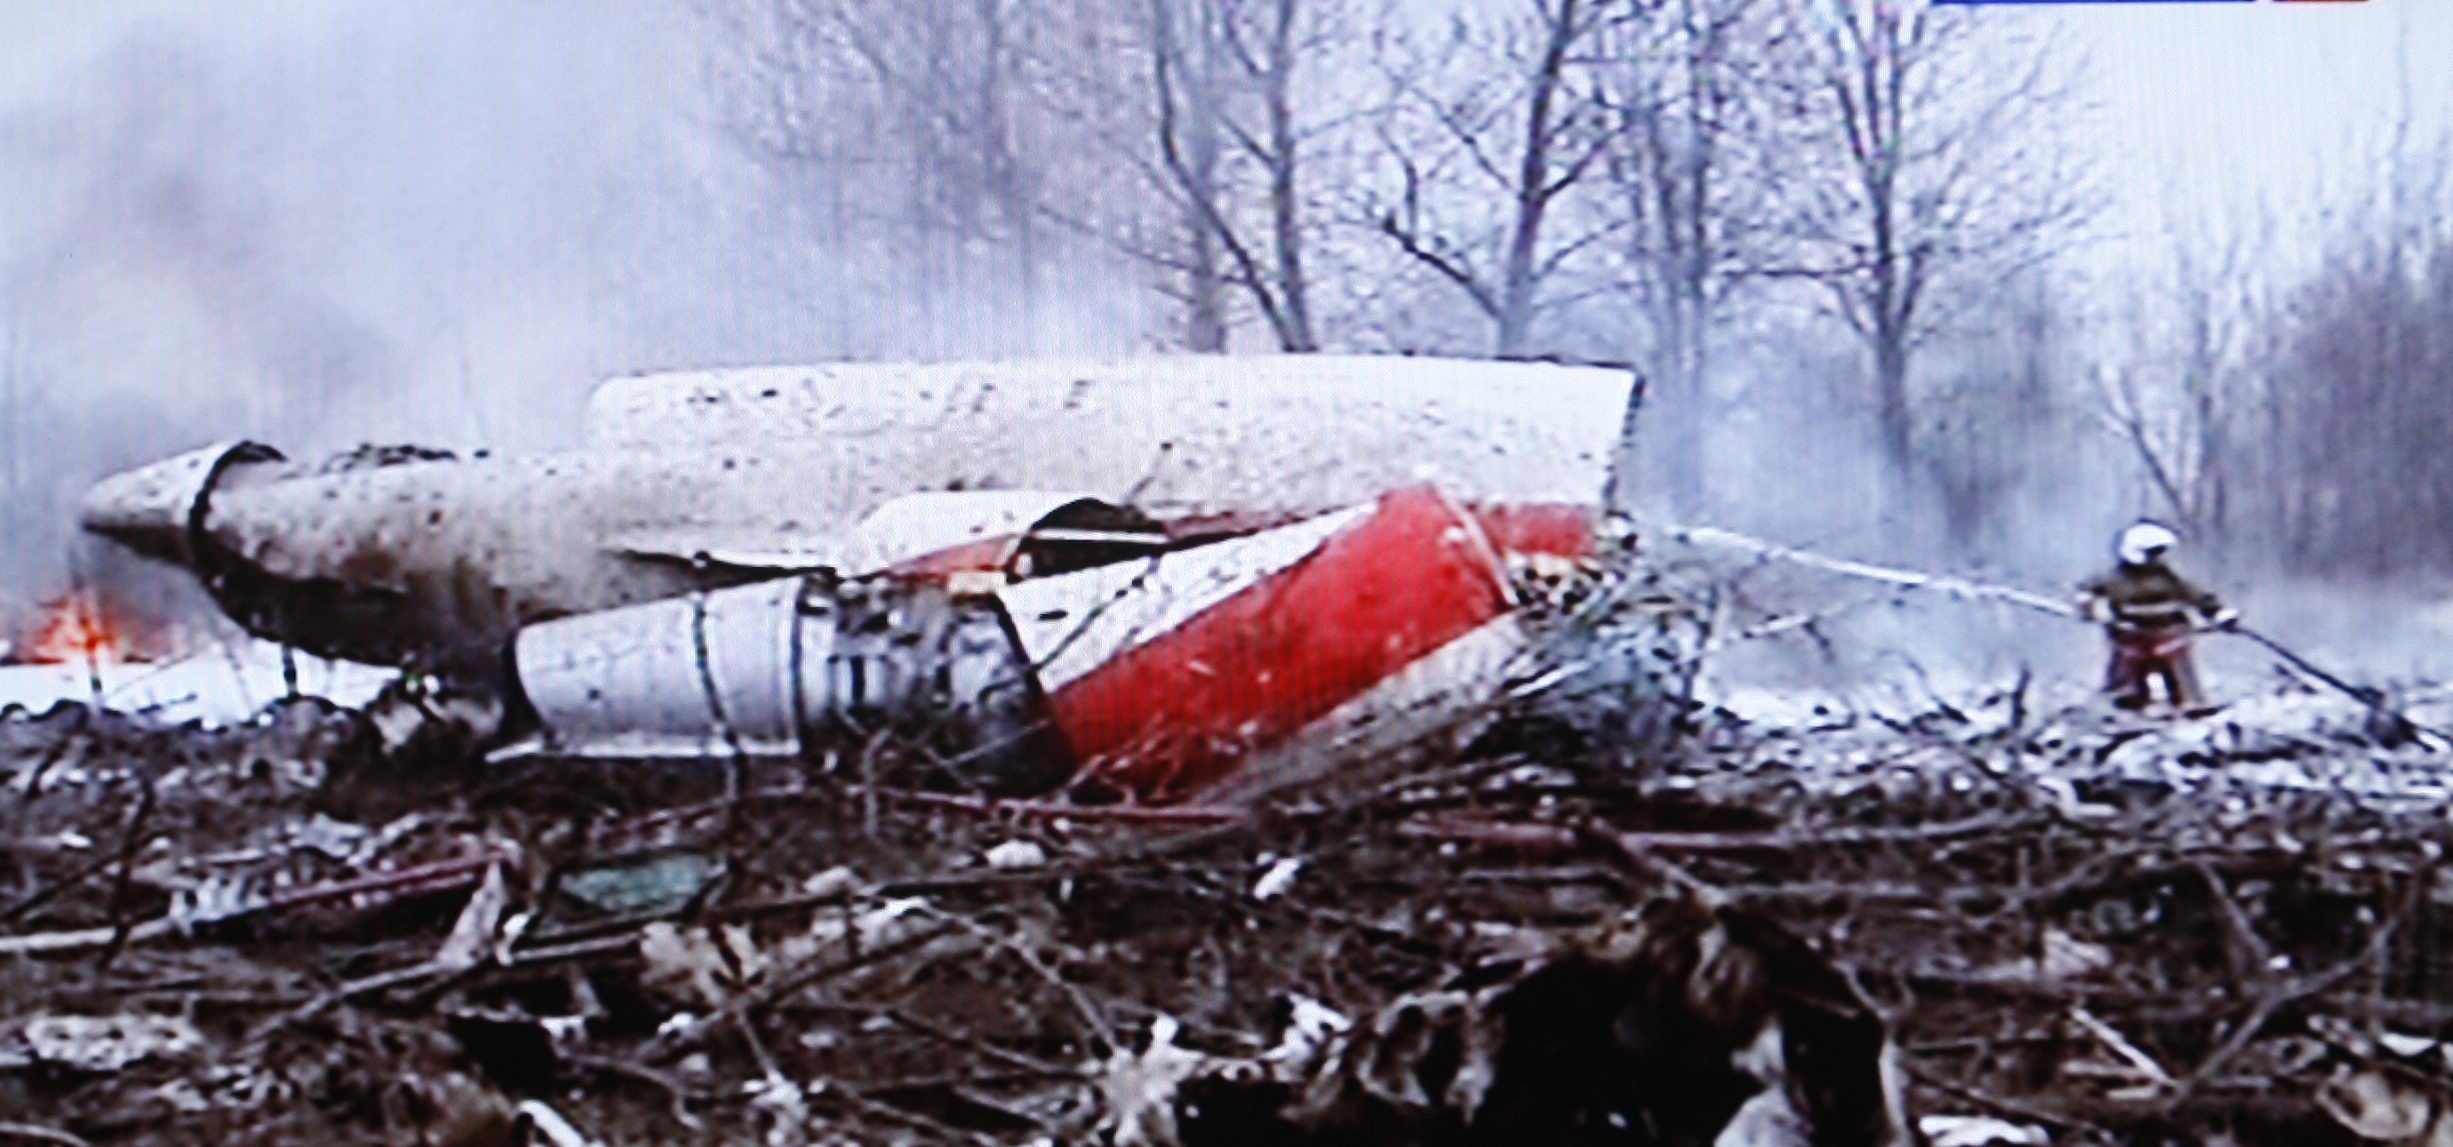 Авиакатастрофа 13. Катастрофа под Смоленском ту-154. Лех Качиньский авиакатастрофа.